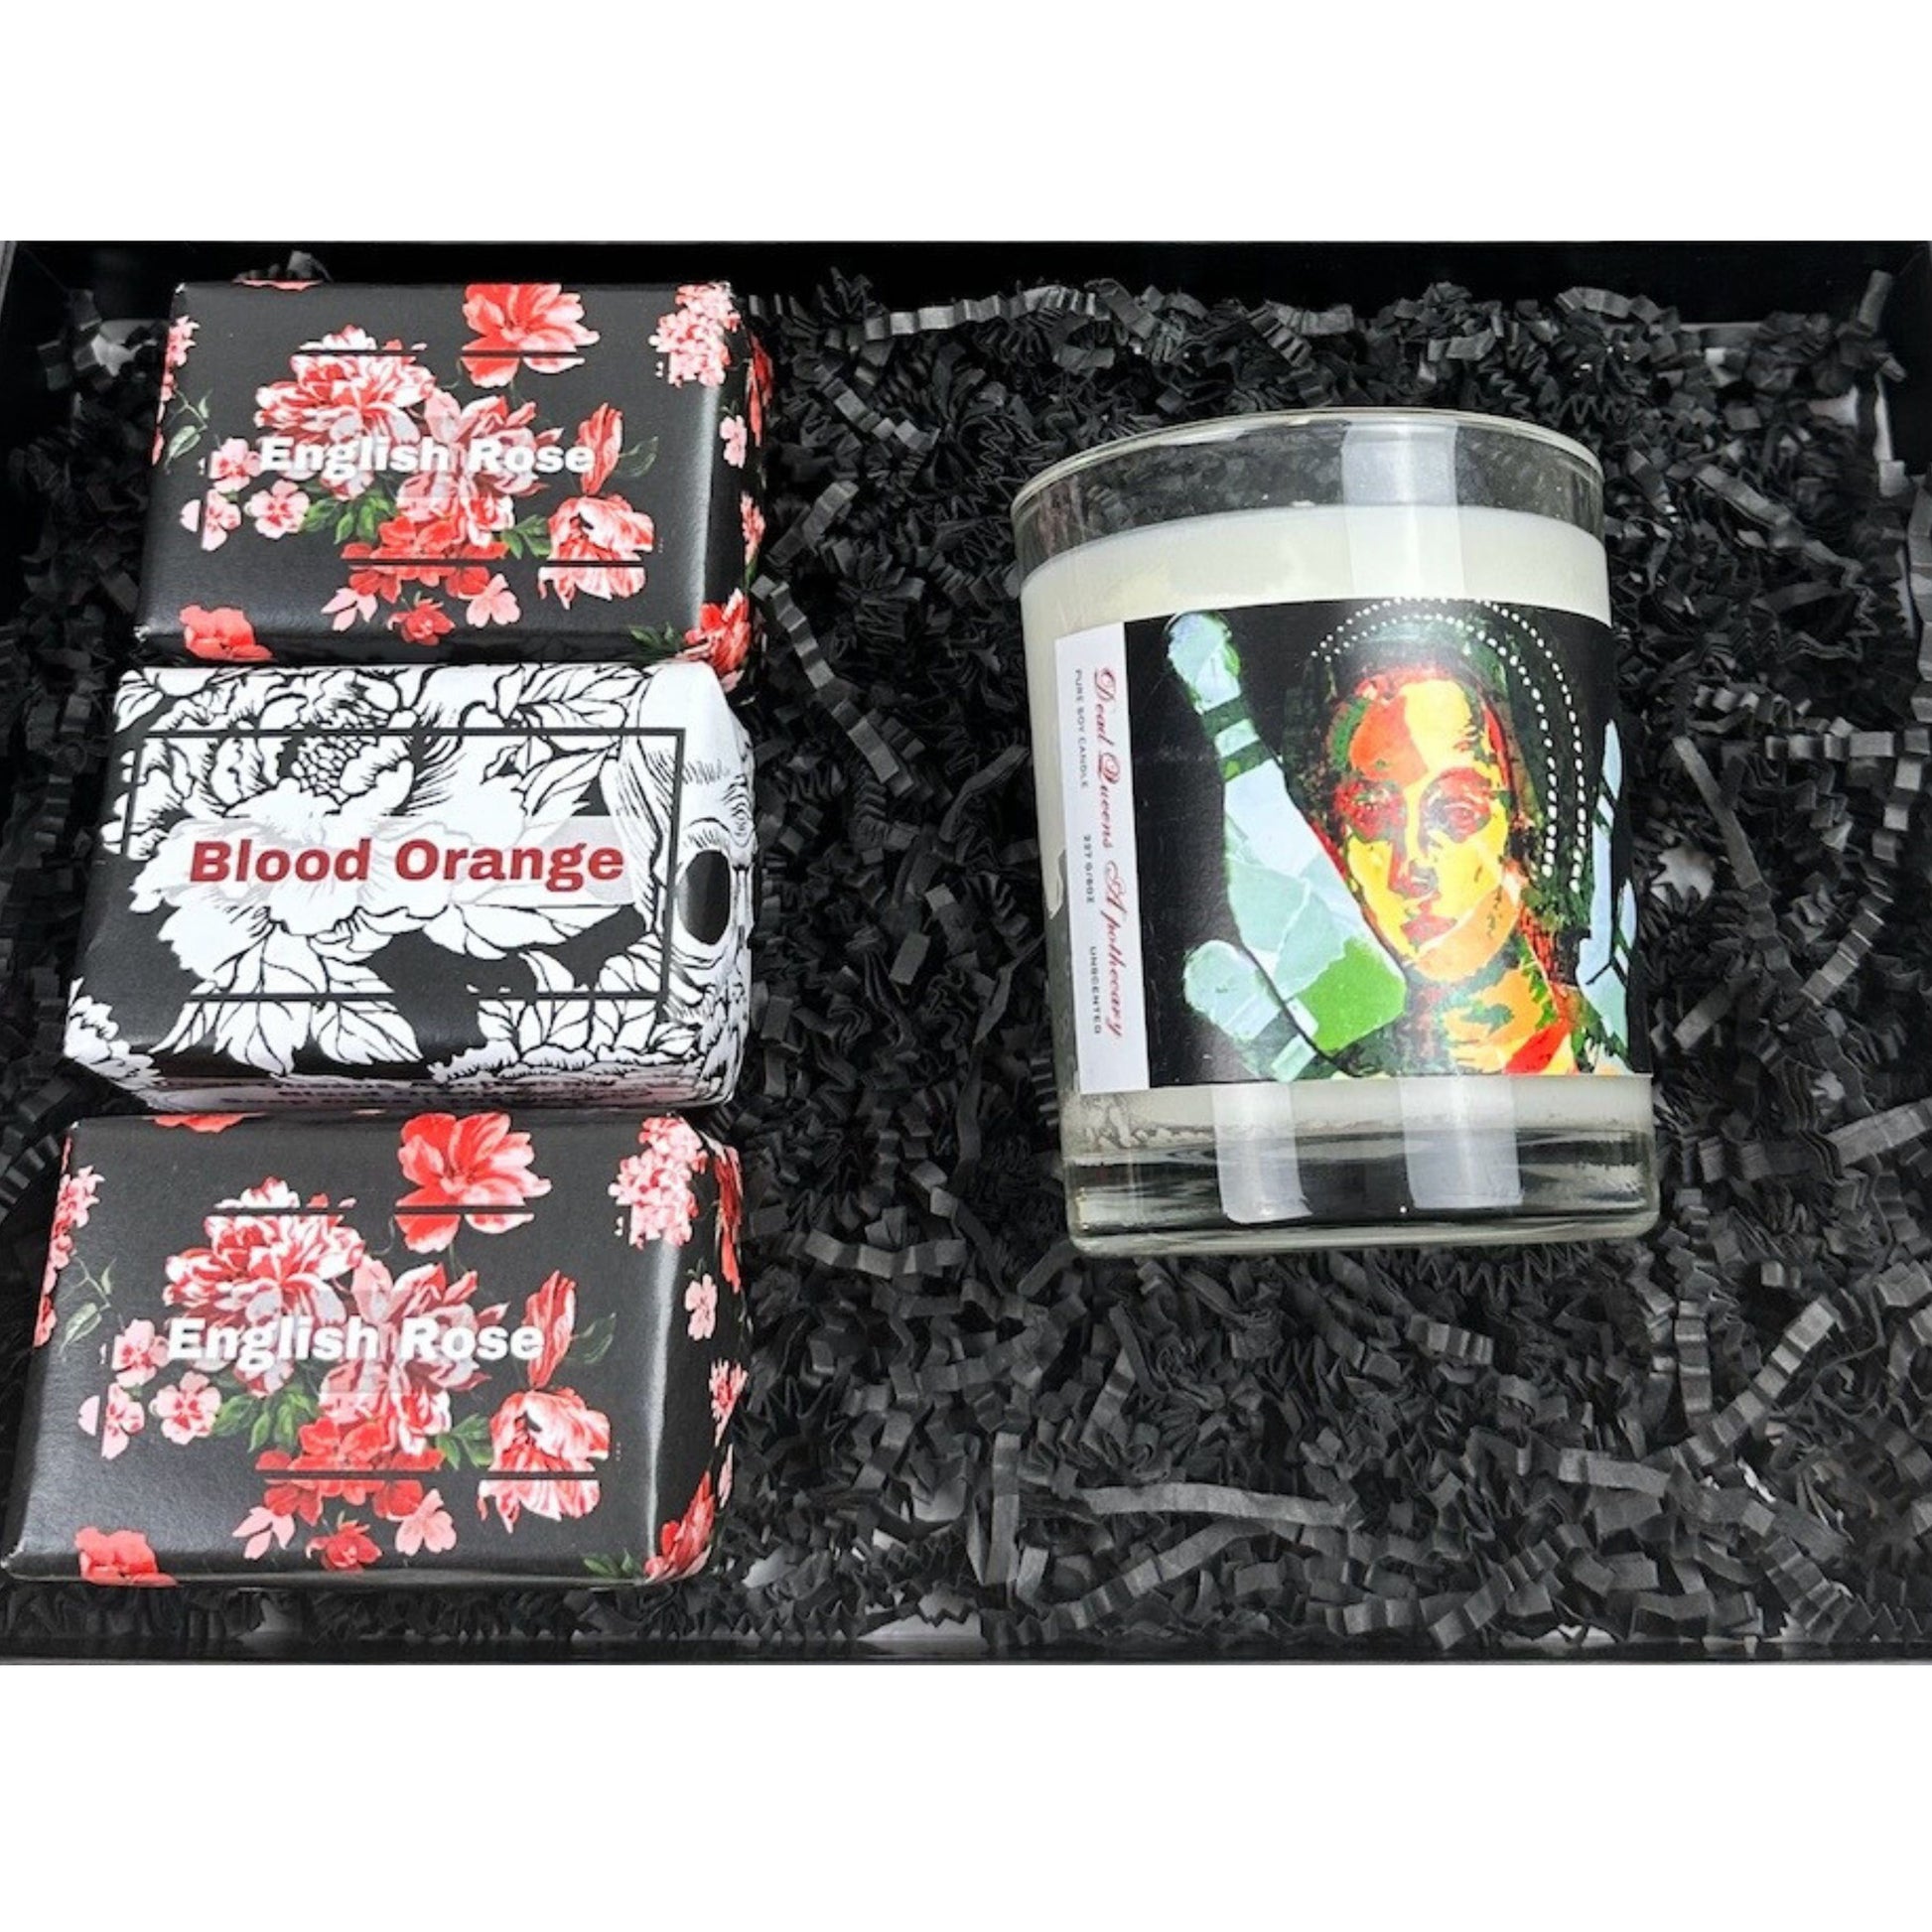 Anne Boleyn Candle and Soap Cake Box-2